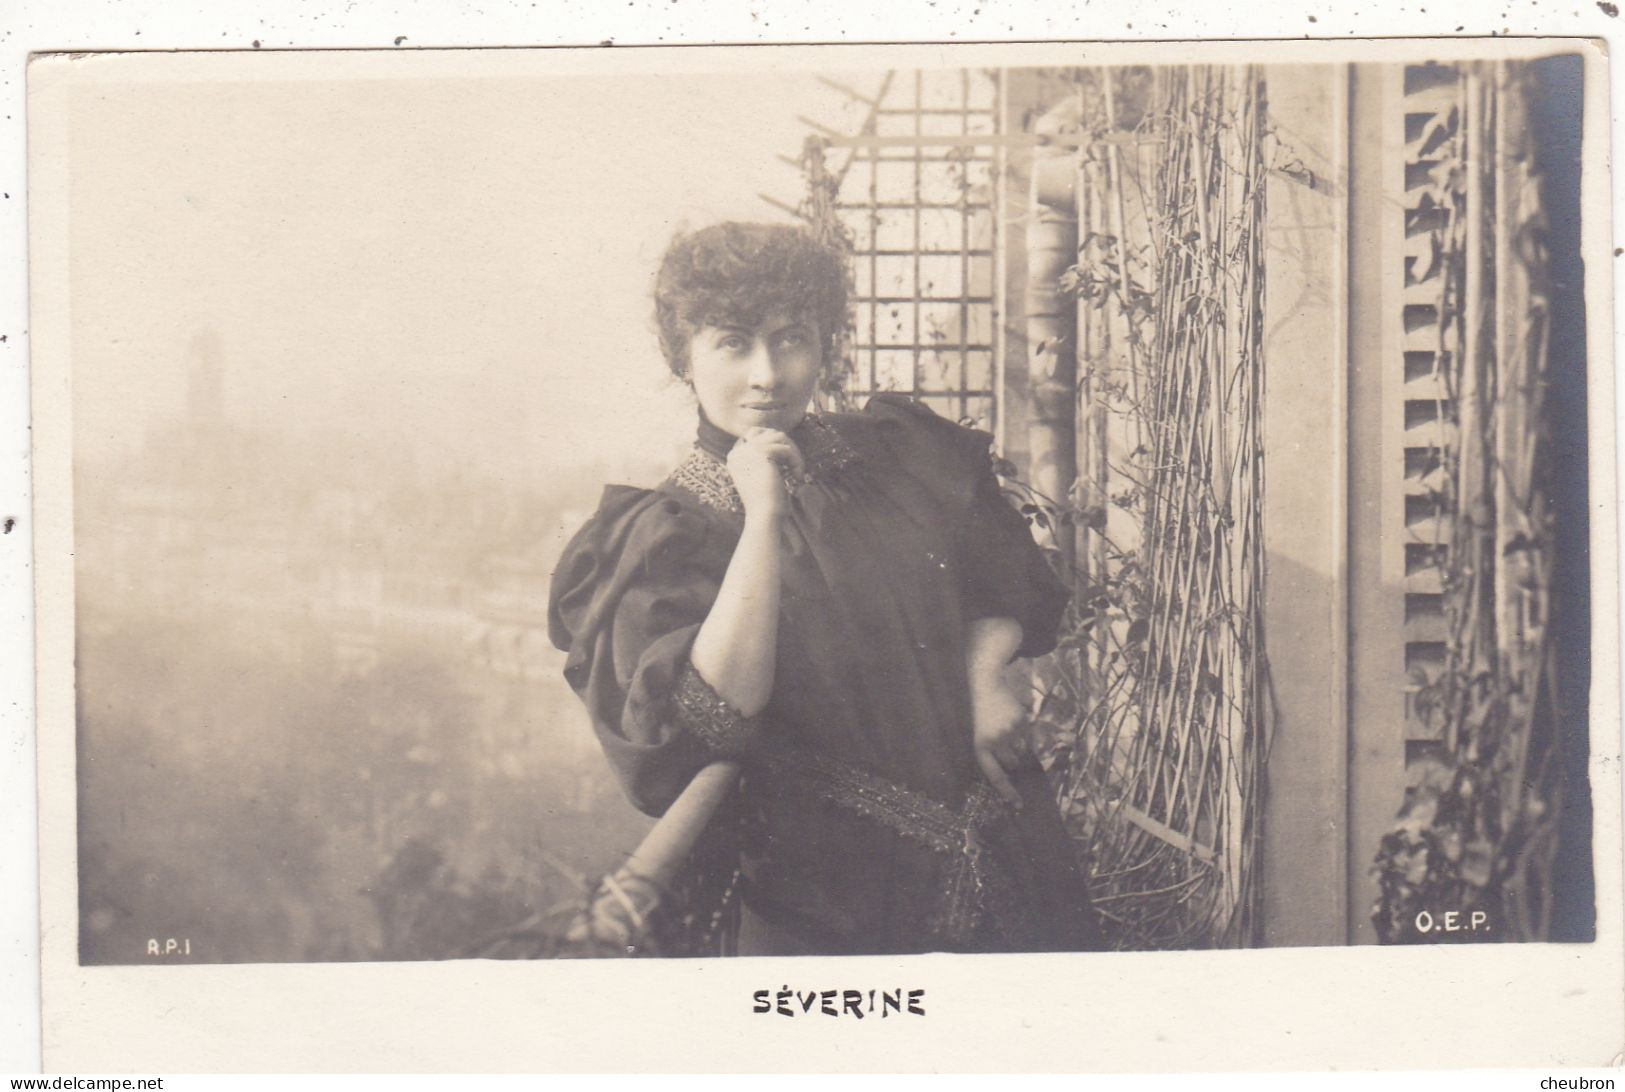 ECRIVAINS. CPA. CAROLINE REMY DITE "SEVERINE " (1855-1929). ECRIVAINE. JOURNALISTE. FEMINISTE .MODERNITE - Ecrivains